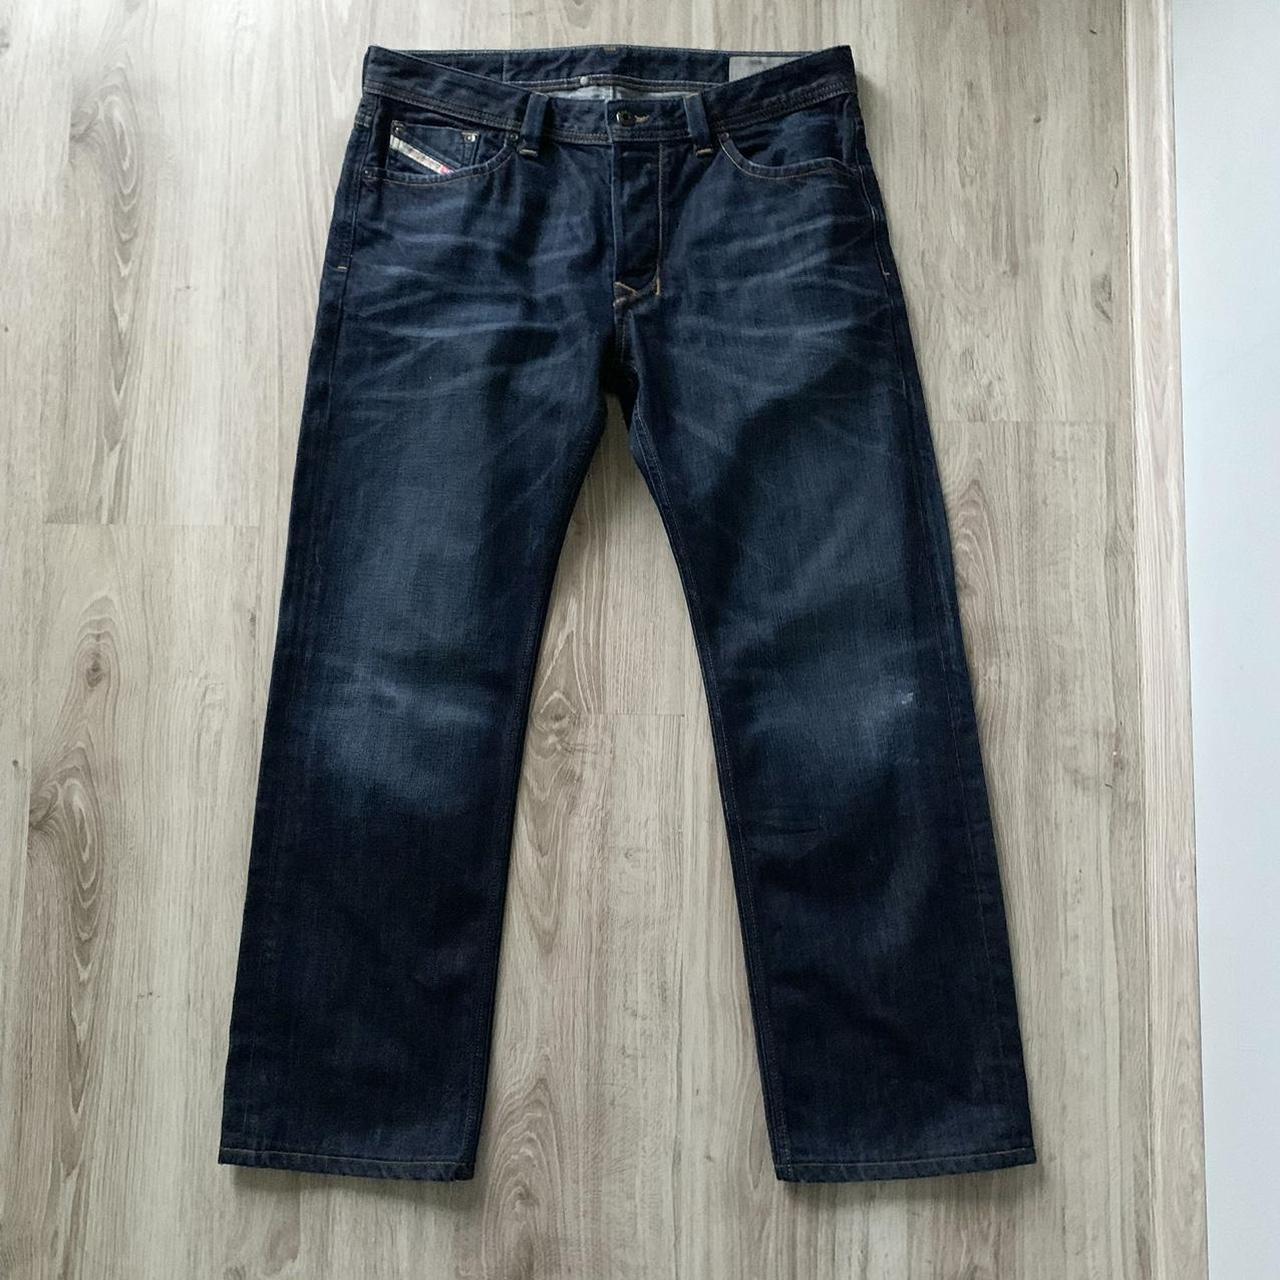 Diesel dark wash baggy jeans authentic, the best... - Depop